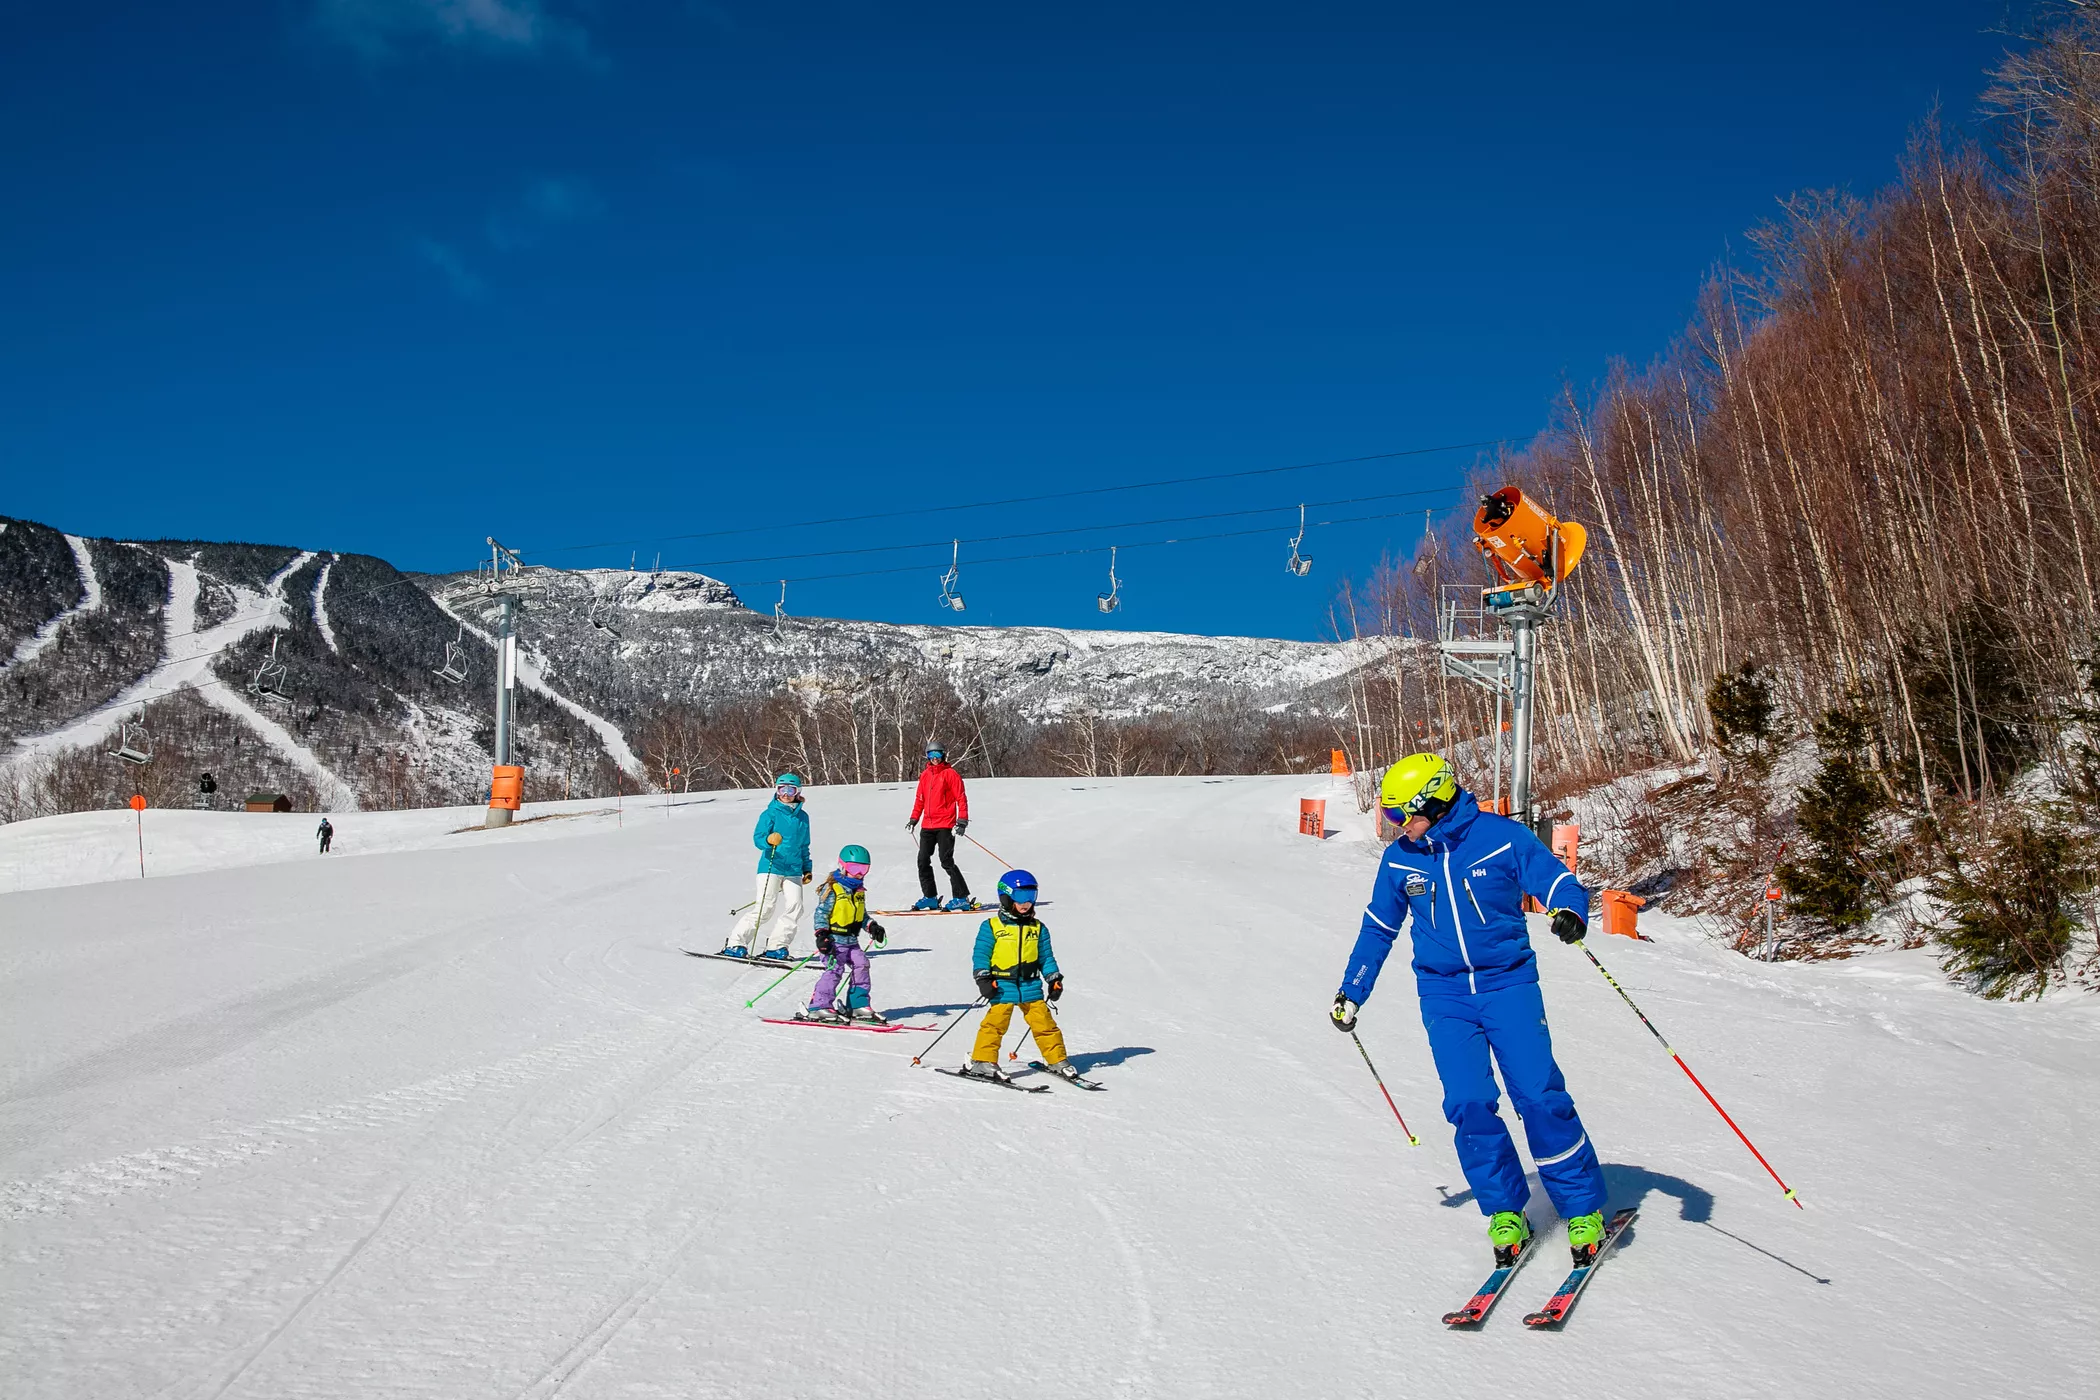 Myhovo in Ukraine, Europe | Snowboarding,Skiing - Rated 4.4